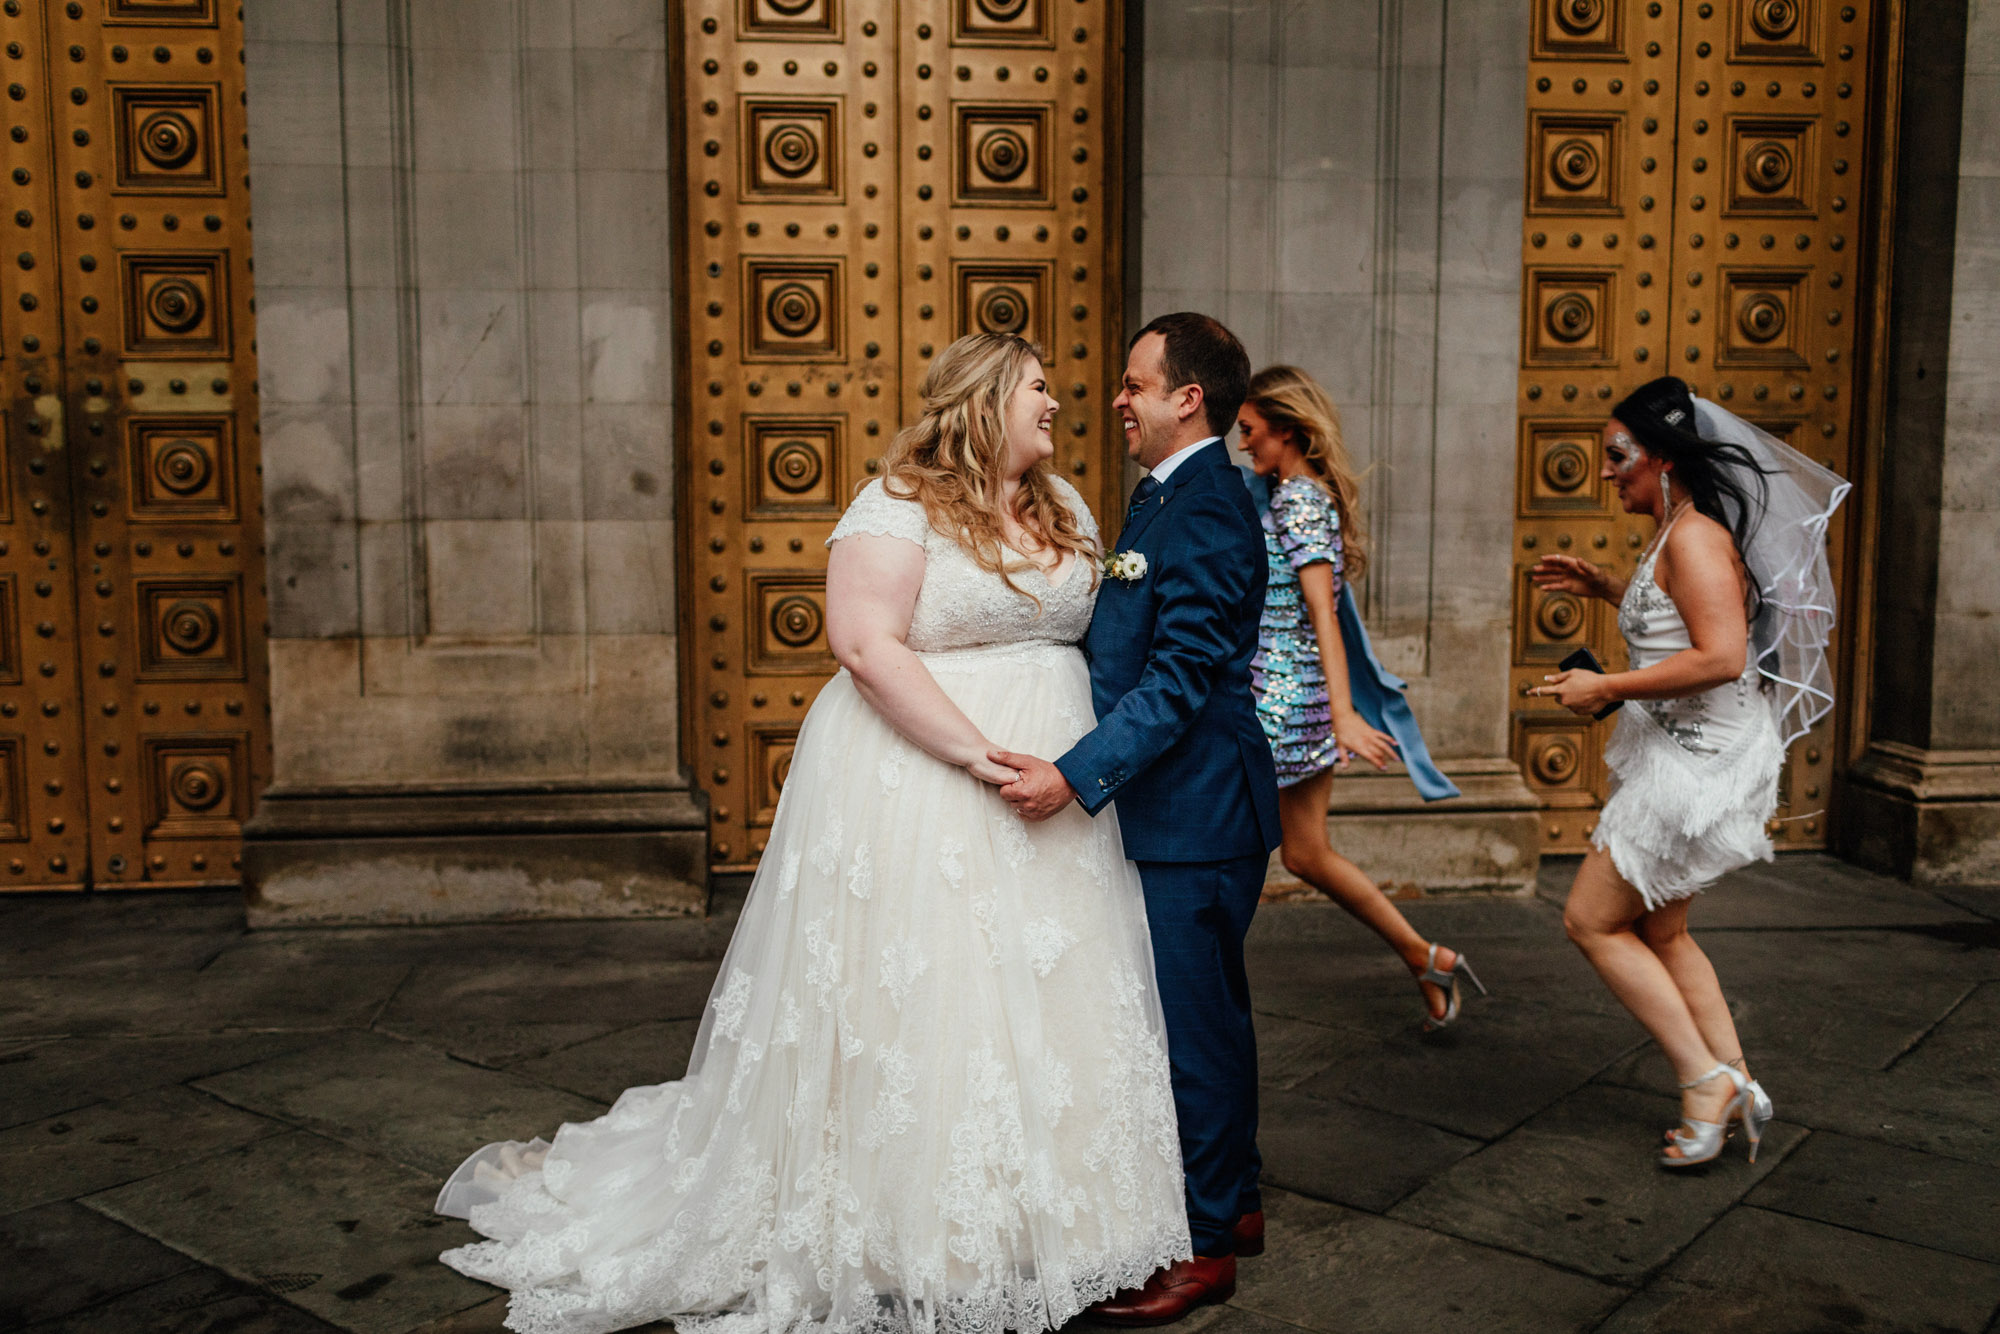 Joy Story - Alternative, fun, colourful wedding photos Glasgow